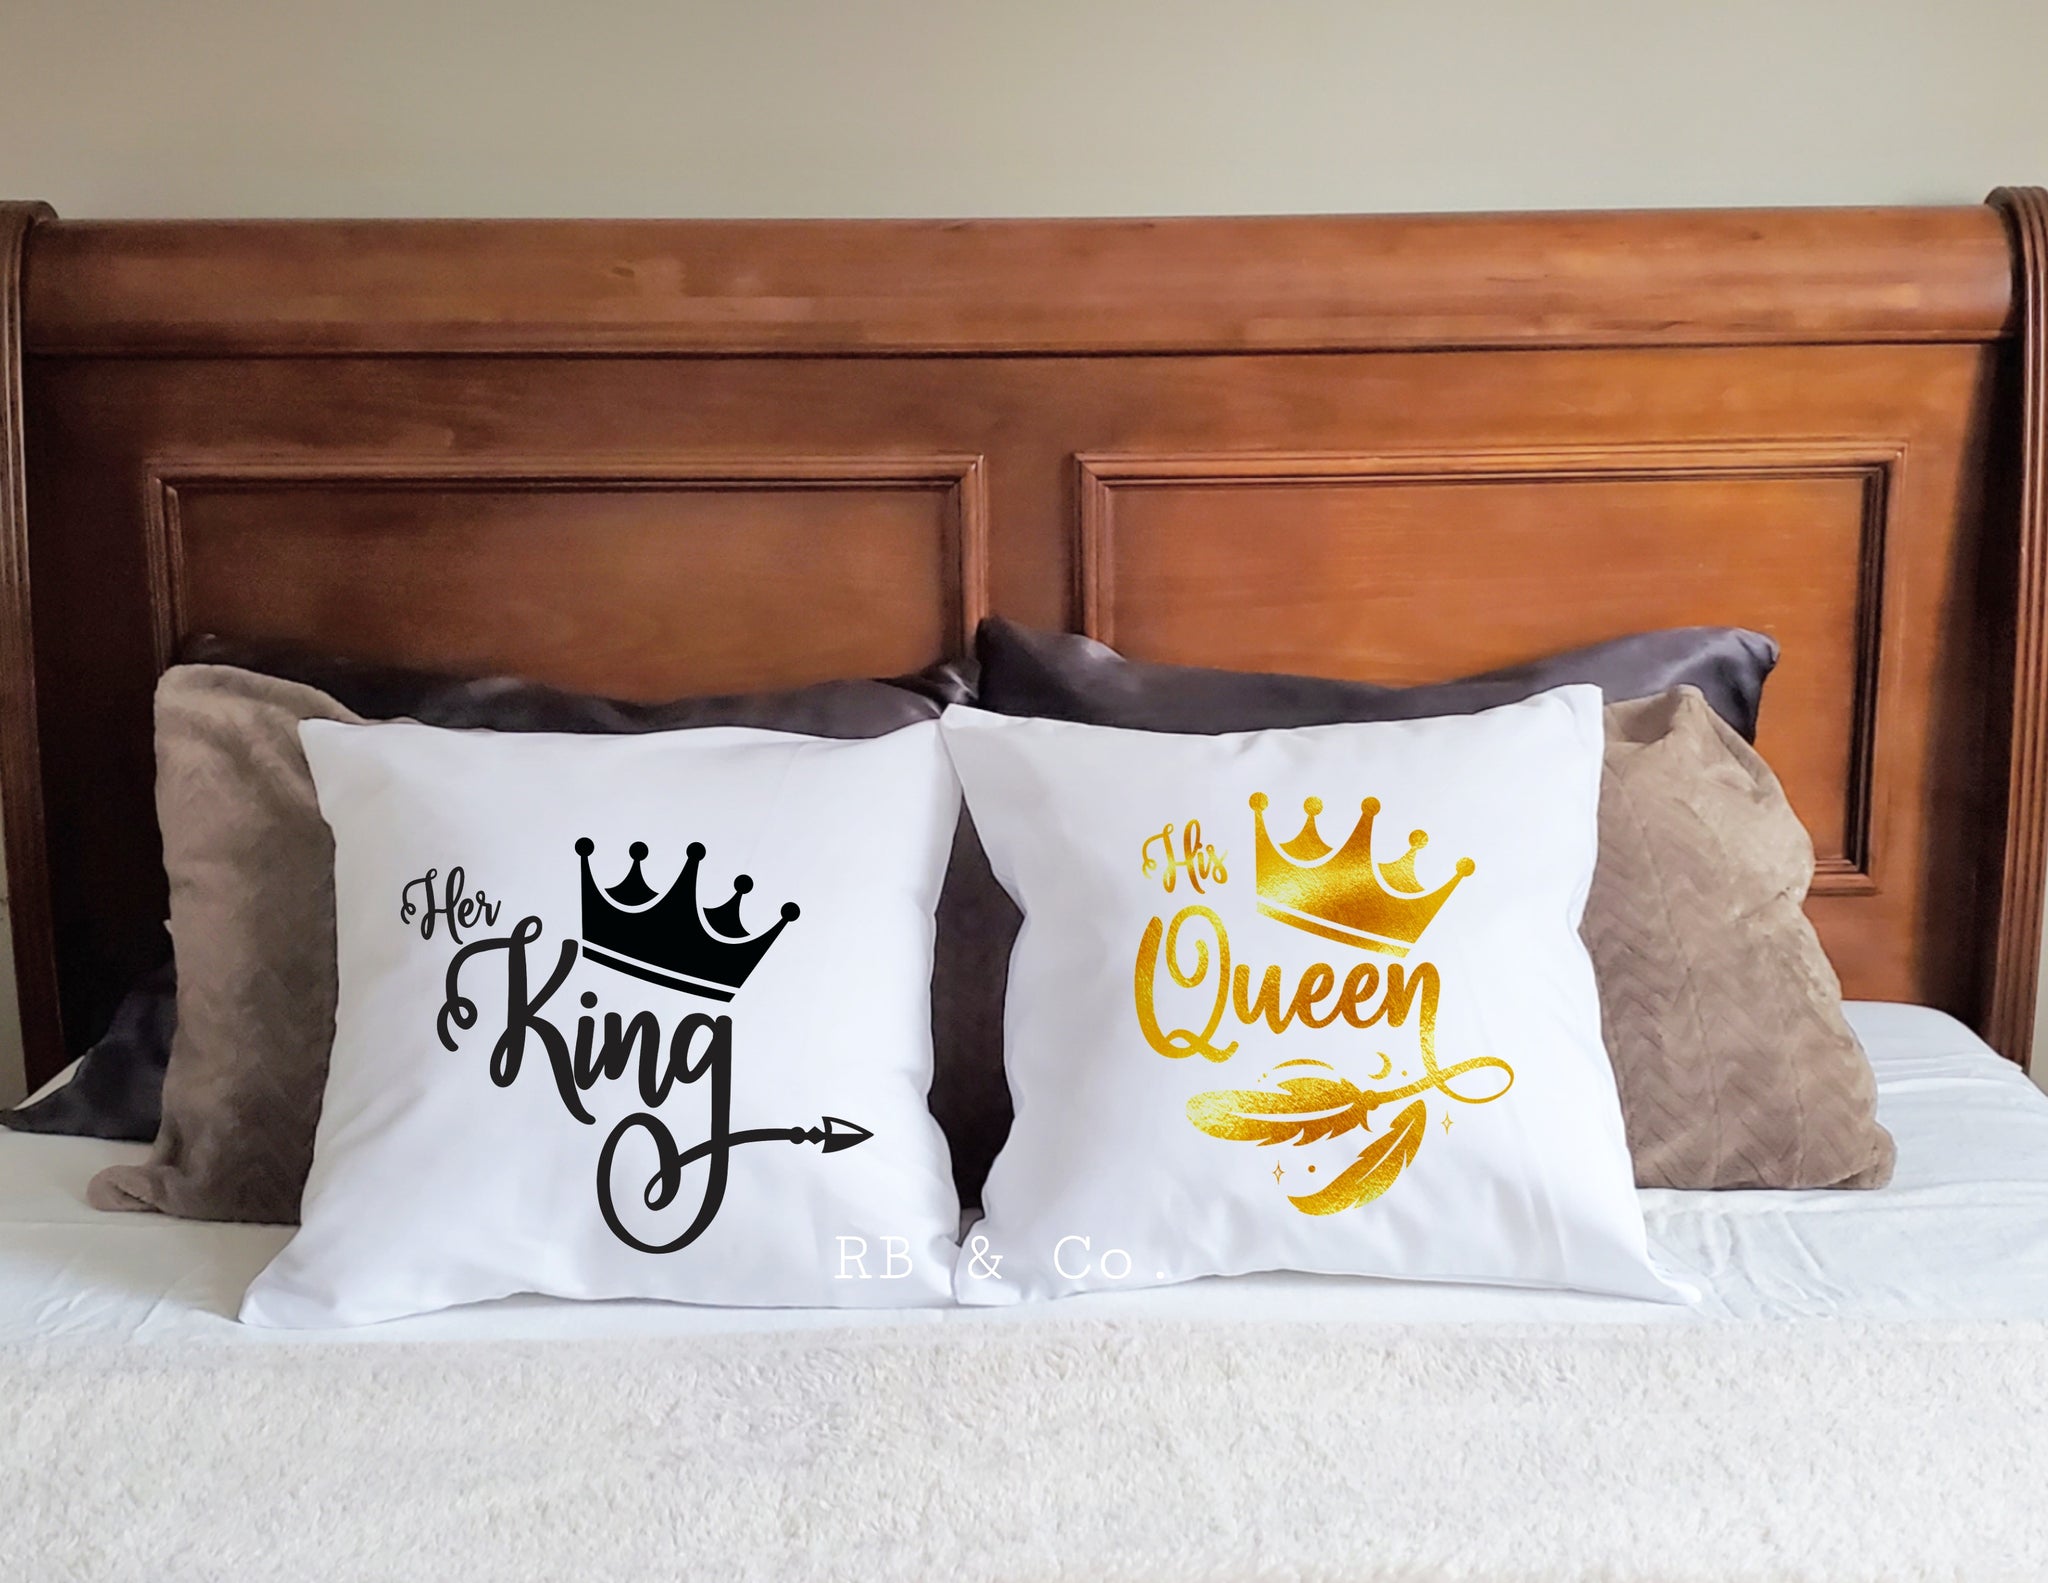 Couple's Prints - Her King. His Queen